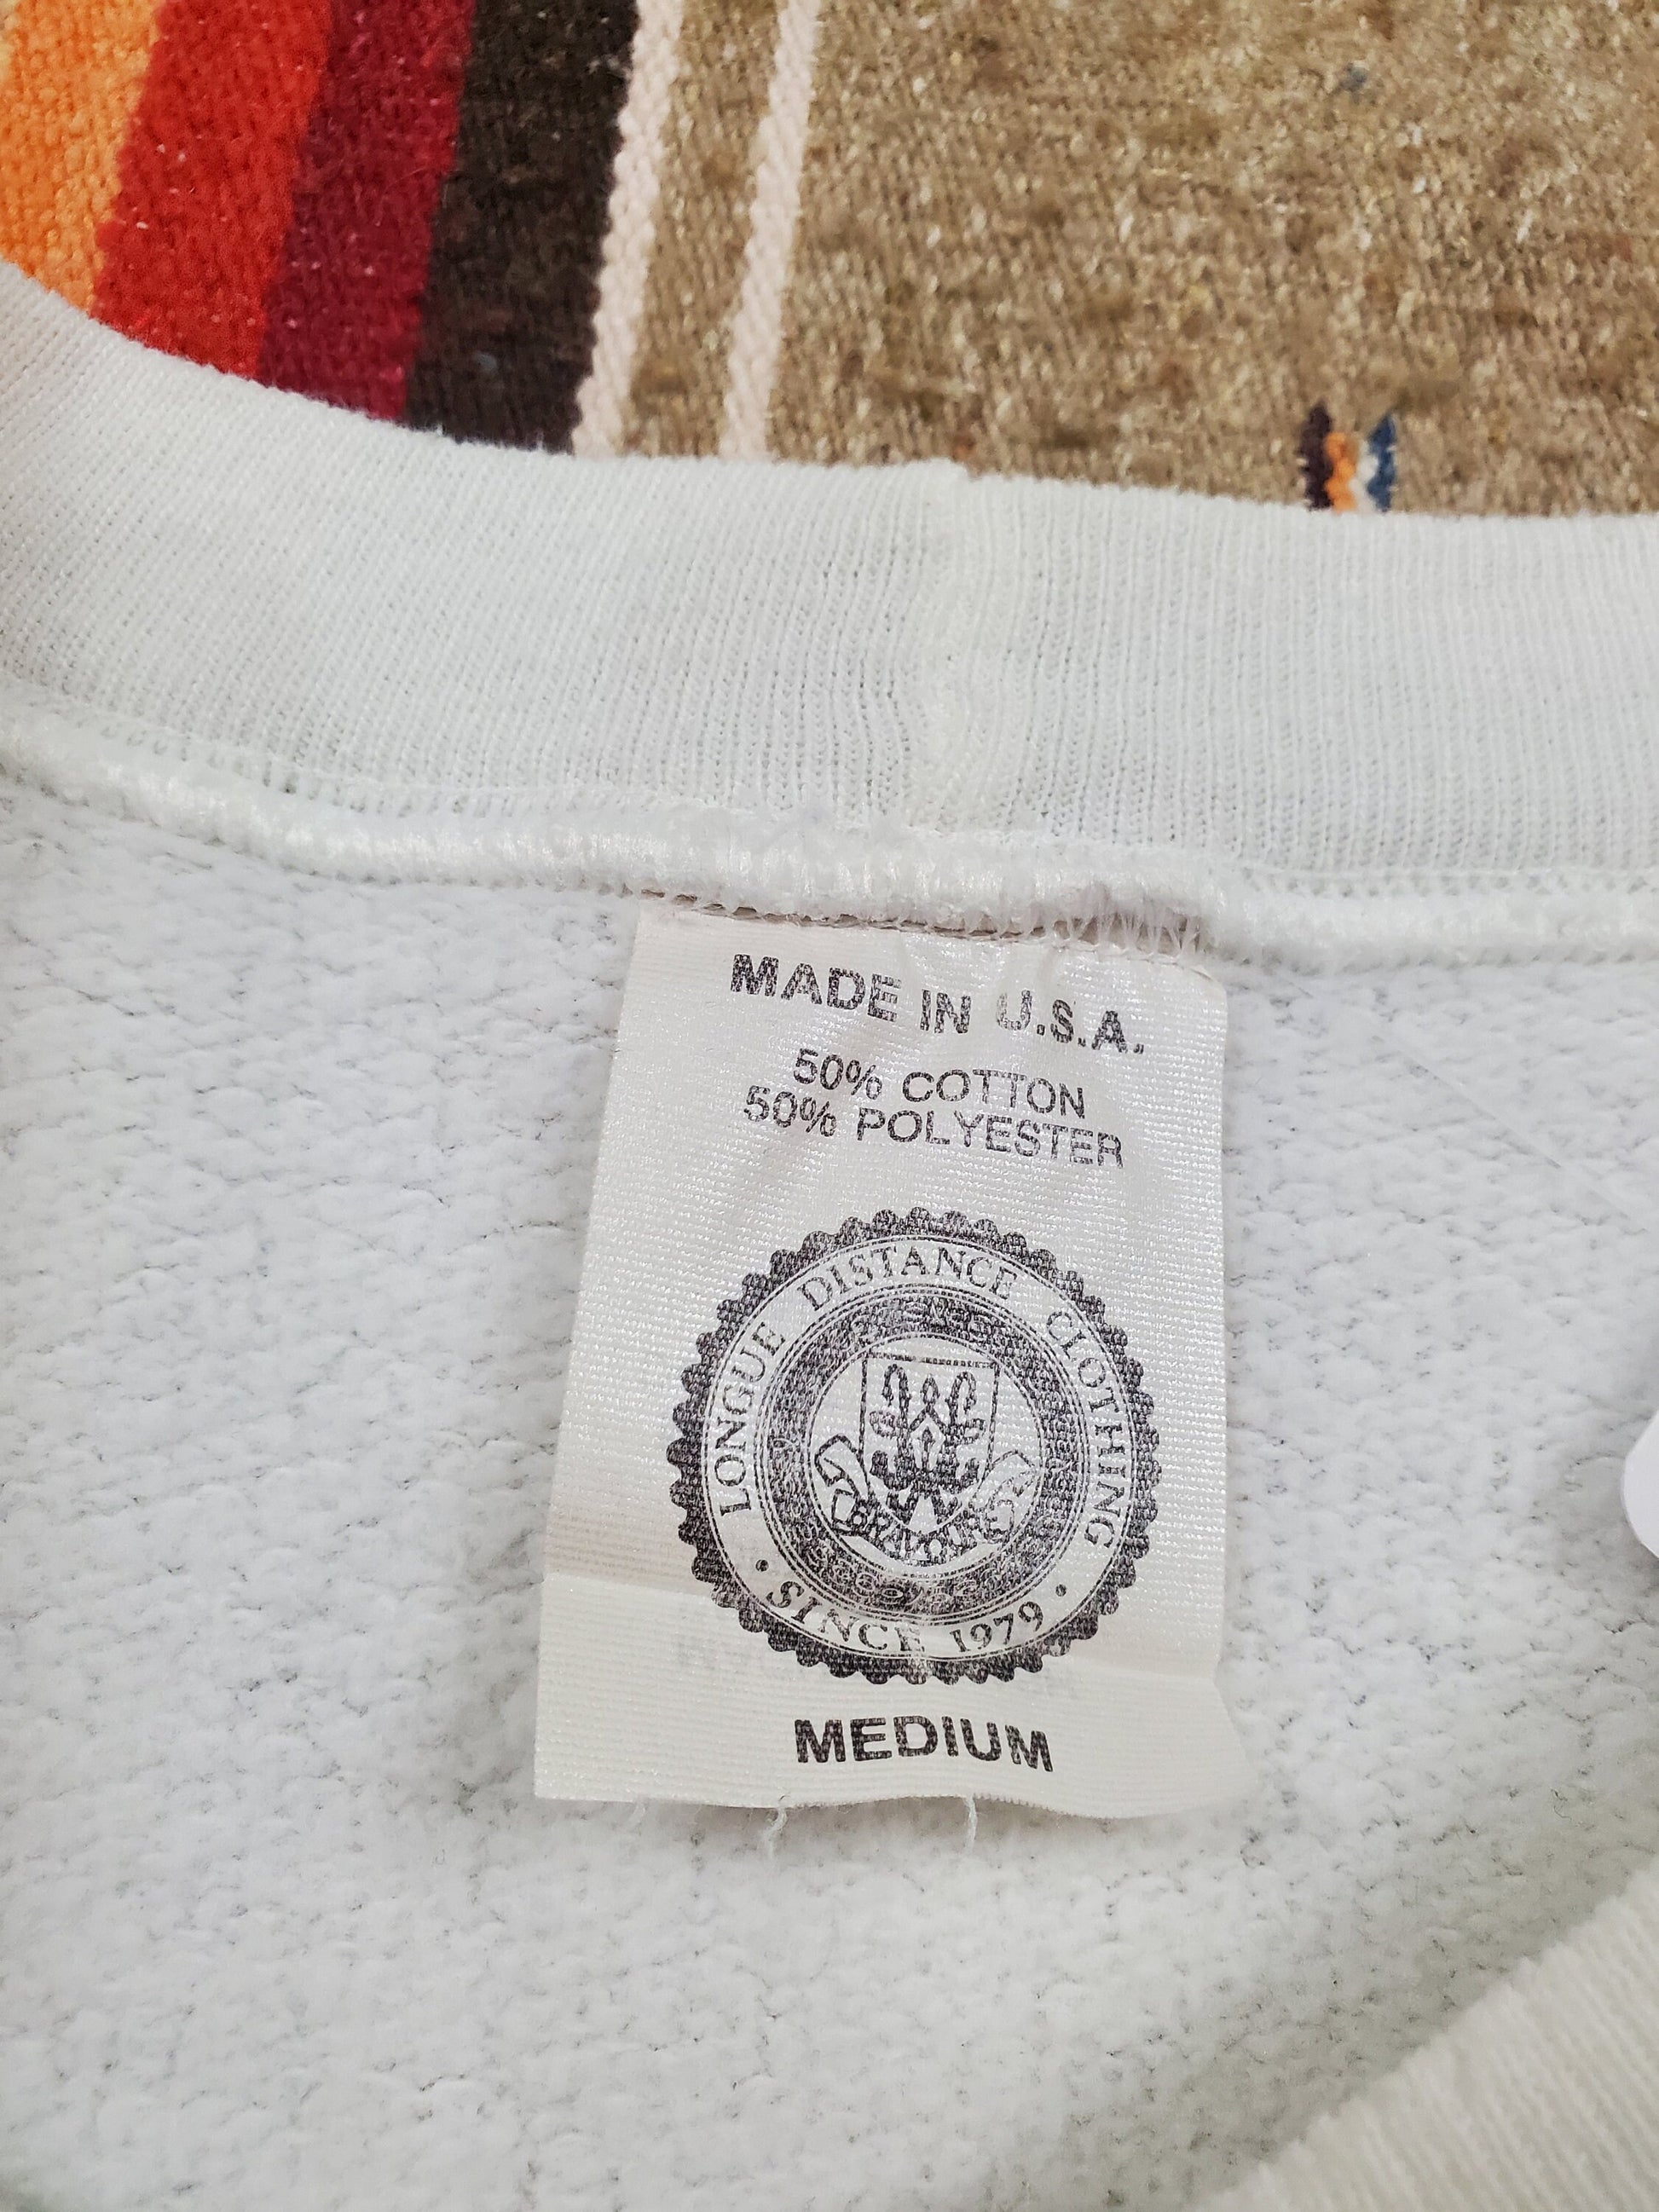 1980s 1989 MBS Love Unlimited Myrtle Beach Raglan Sweatshirt Made in USA Size S